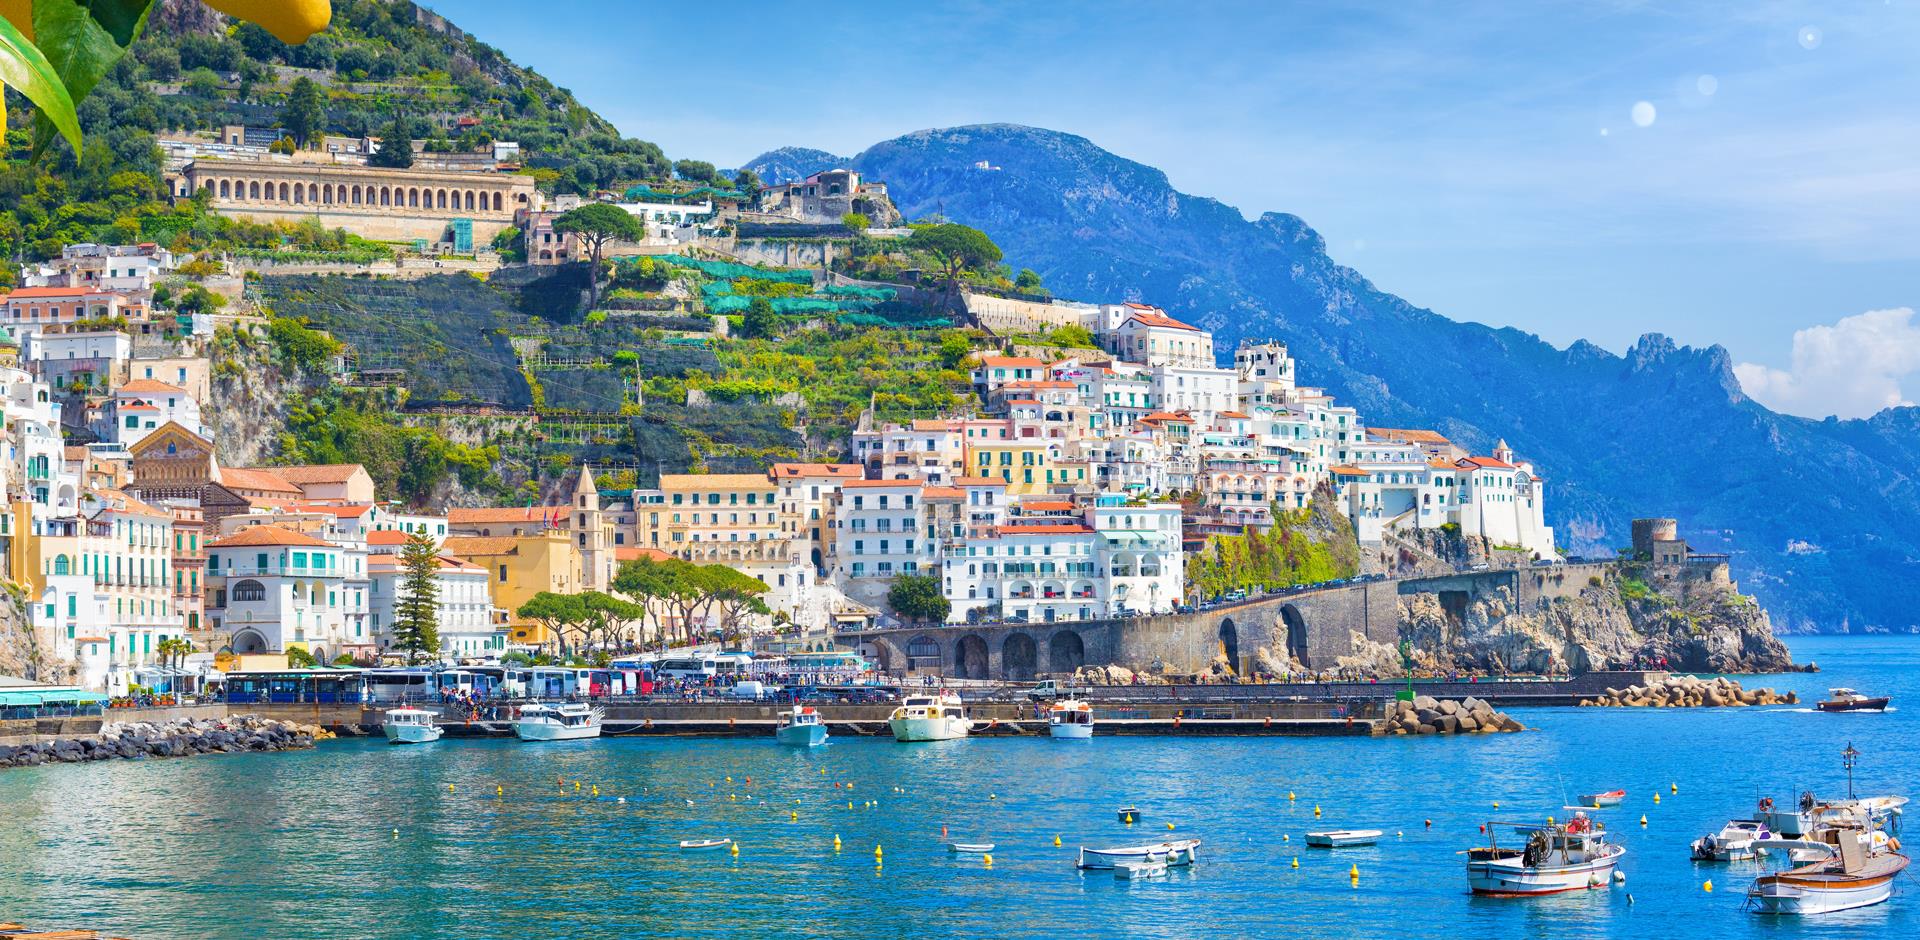 Houses and ocean in Amalfi Coast, Italy